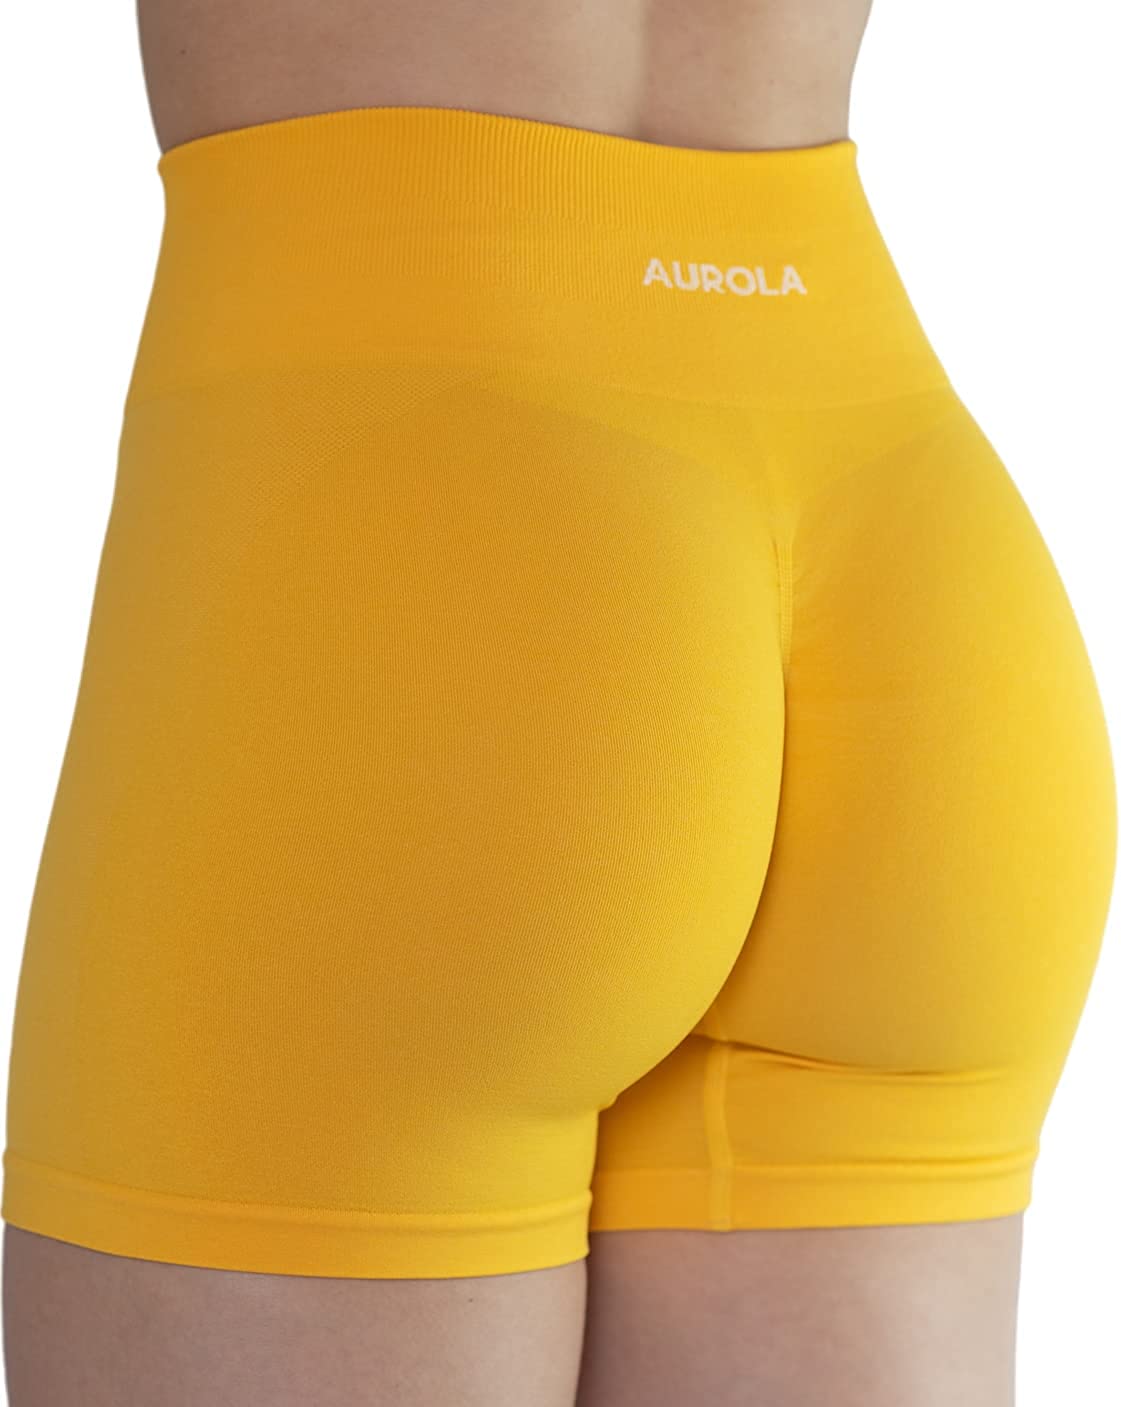 AUROLA Intensify V2.0 Short Women's Workout Shorts Seamless High Waist  Running Sport Gym Fitness Yoga Stretch Athletic Shorts 3.6 Black at   Women's Clothing store